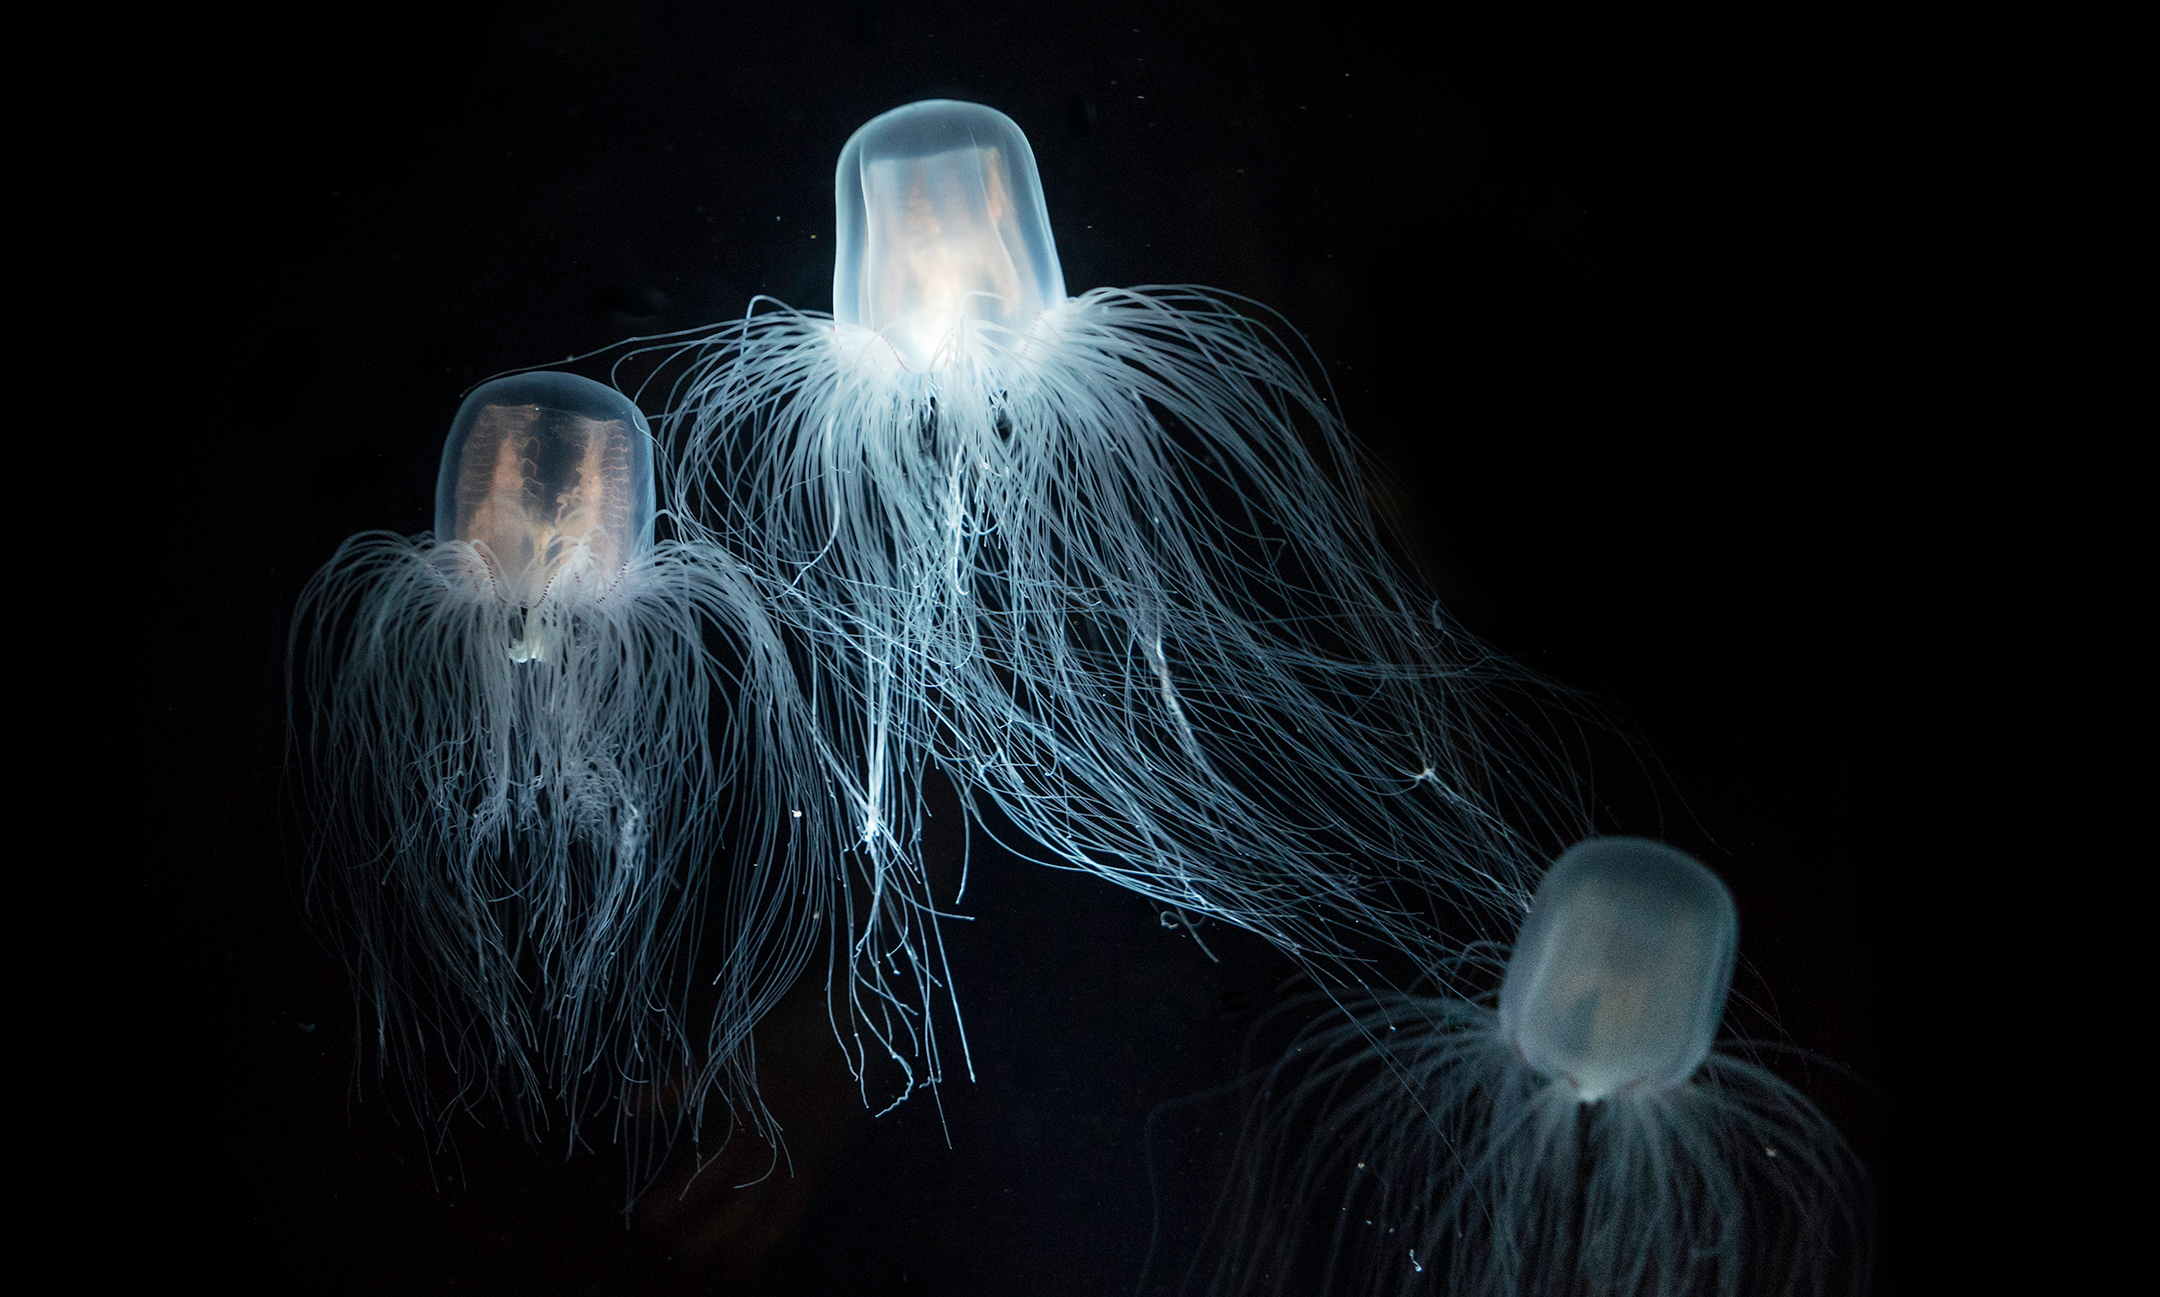 Three jellyfish with long, hair-like tendrils, photographed in dark ocean water